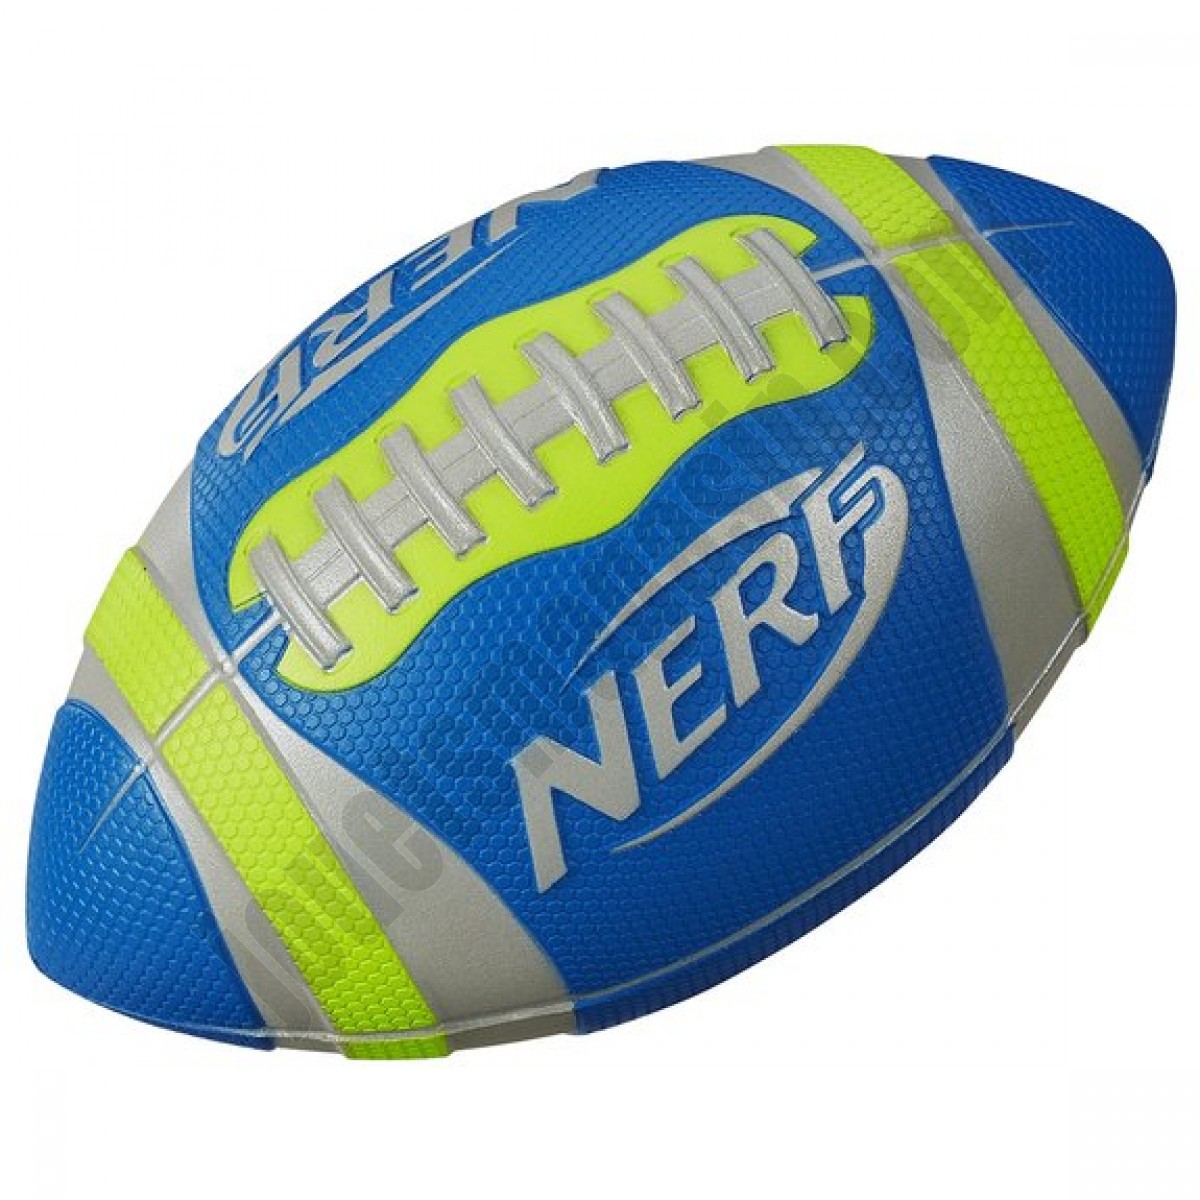 Nerf - Ballon de football américain Pro Grip En promotion - Nerf - Ballon de football américain Pro Grip En promotion